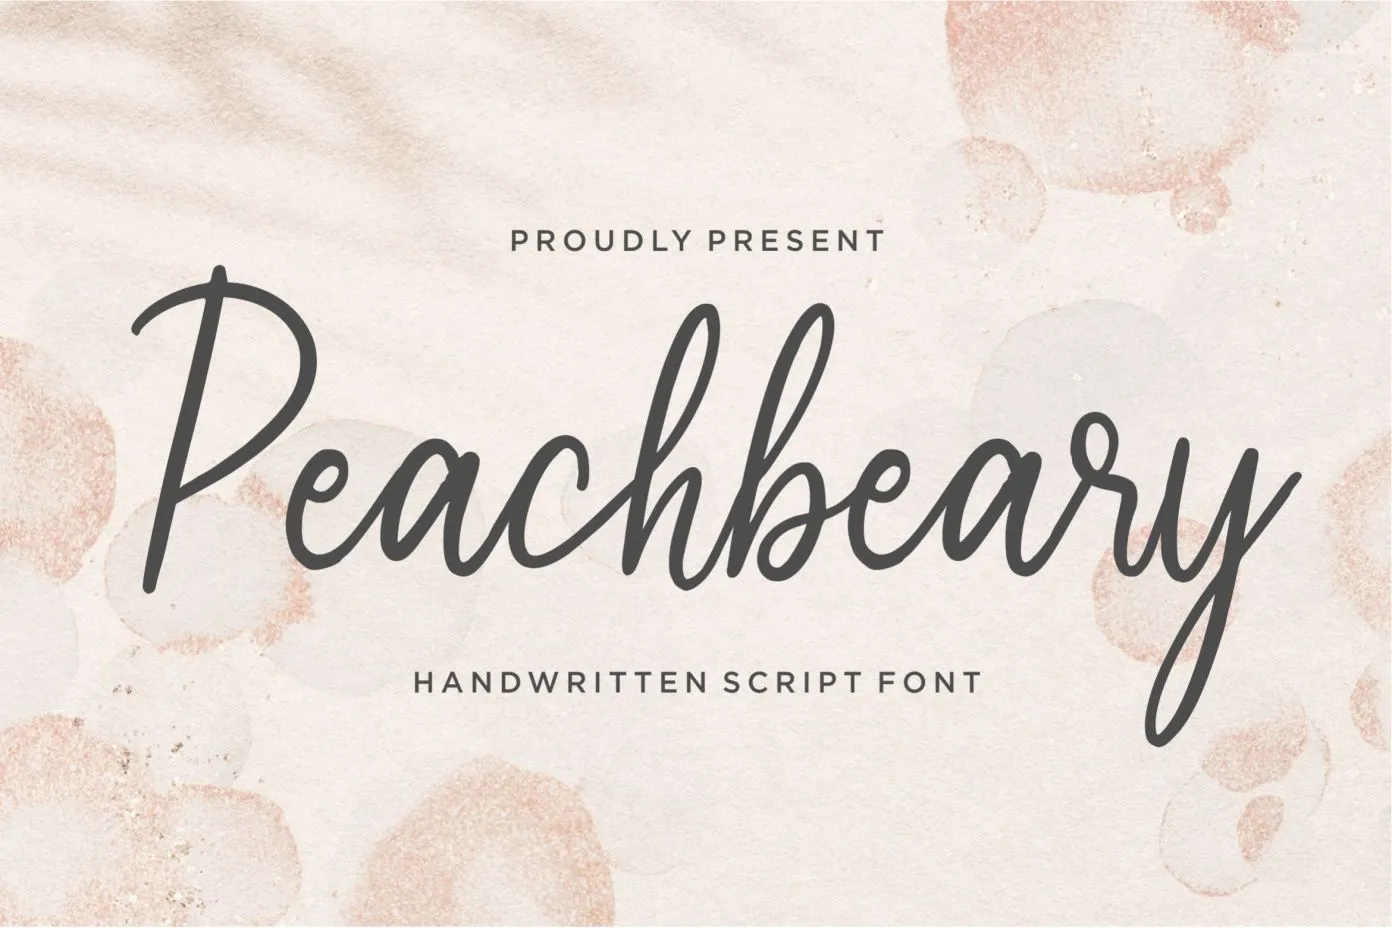 Peachbeary Font